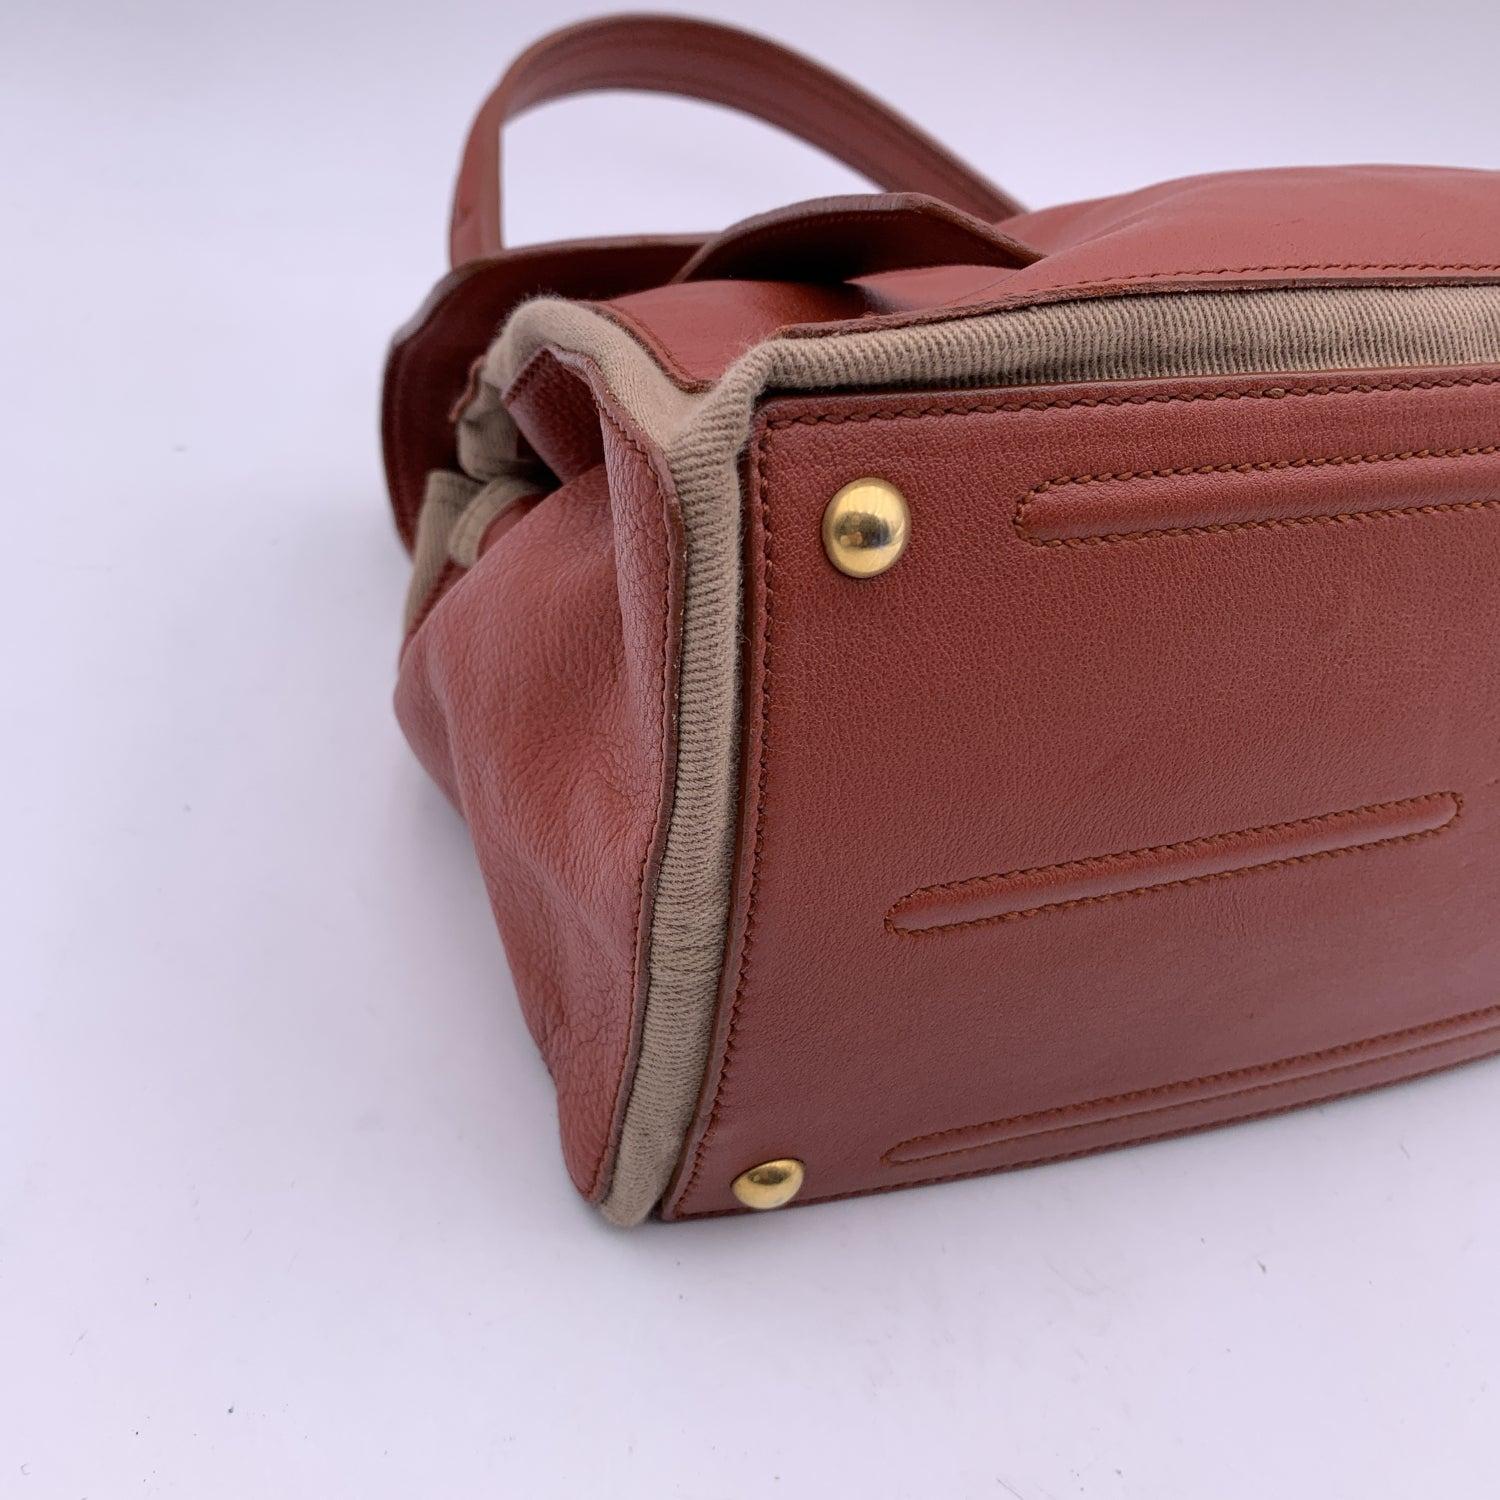 Yves Saint Laurent Brown Leather Canvas Muse 2 Two Satchel Bag Handbag 1